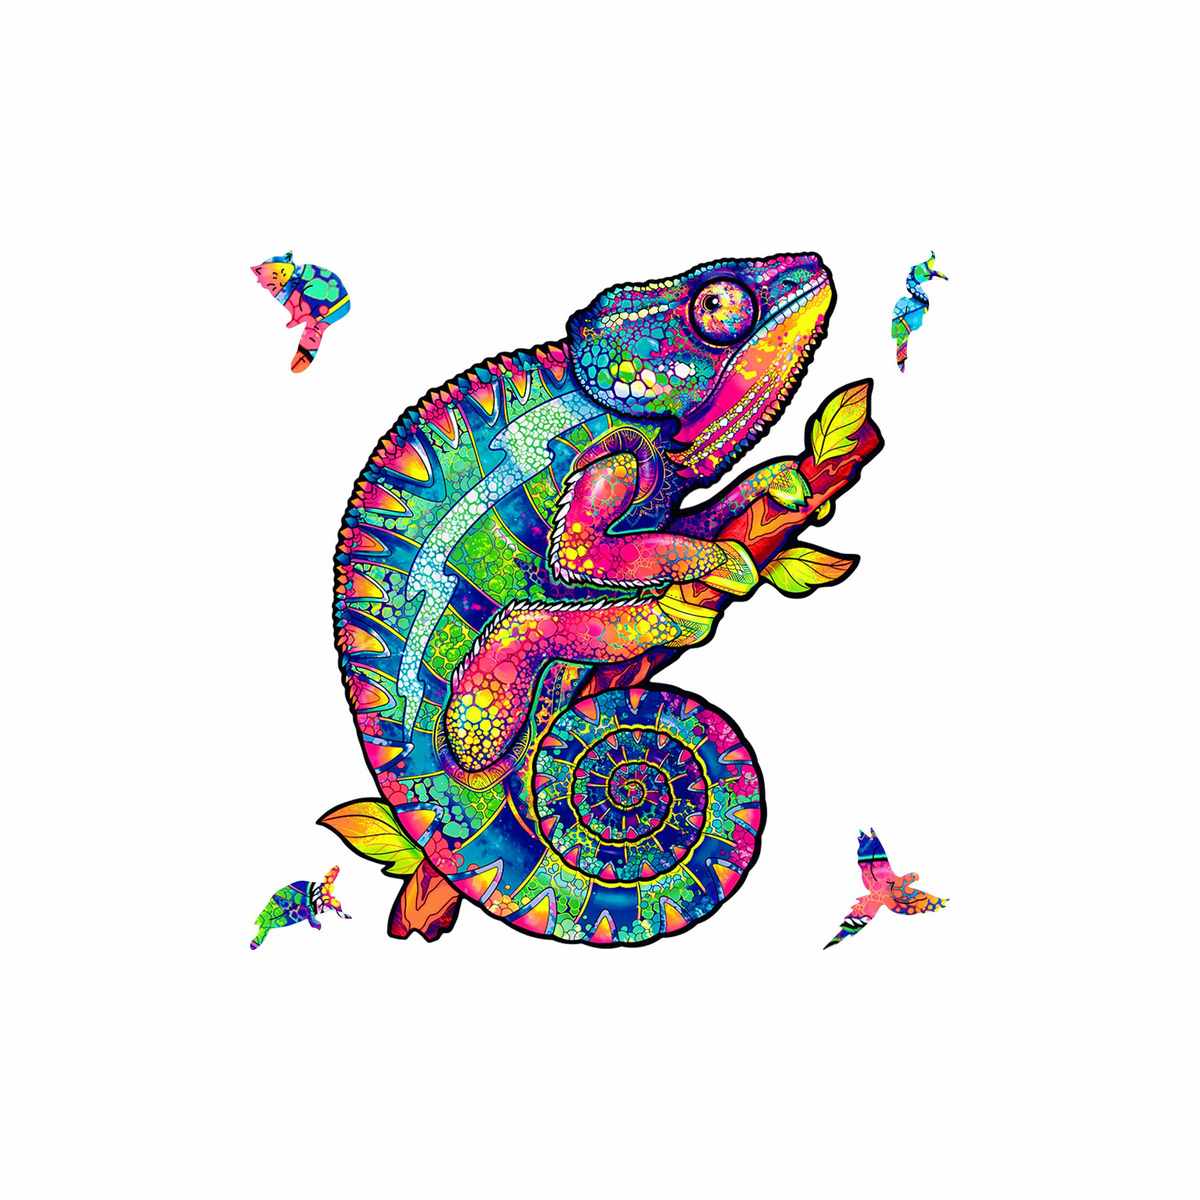 Unidragon Puzzle Iridescent Chameleon